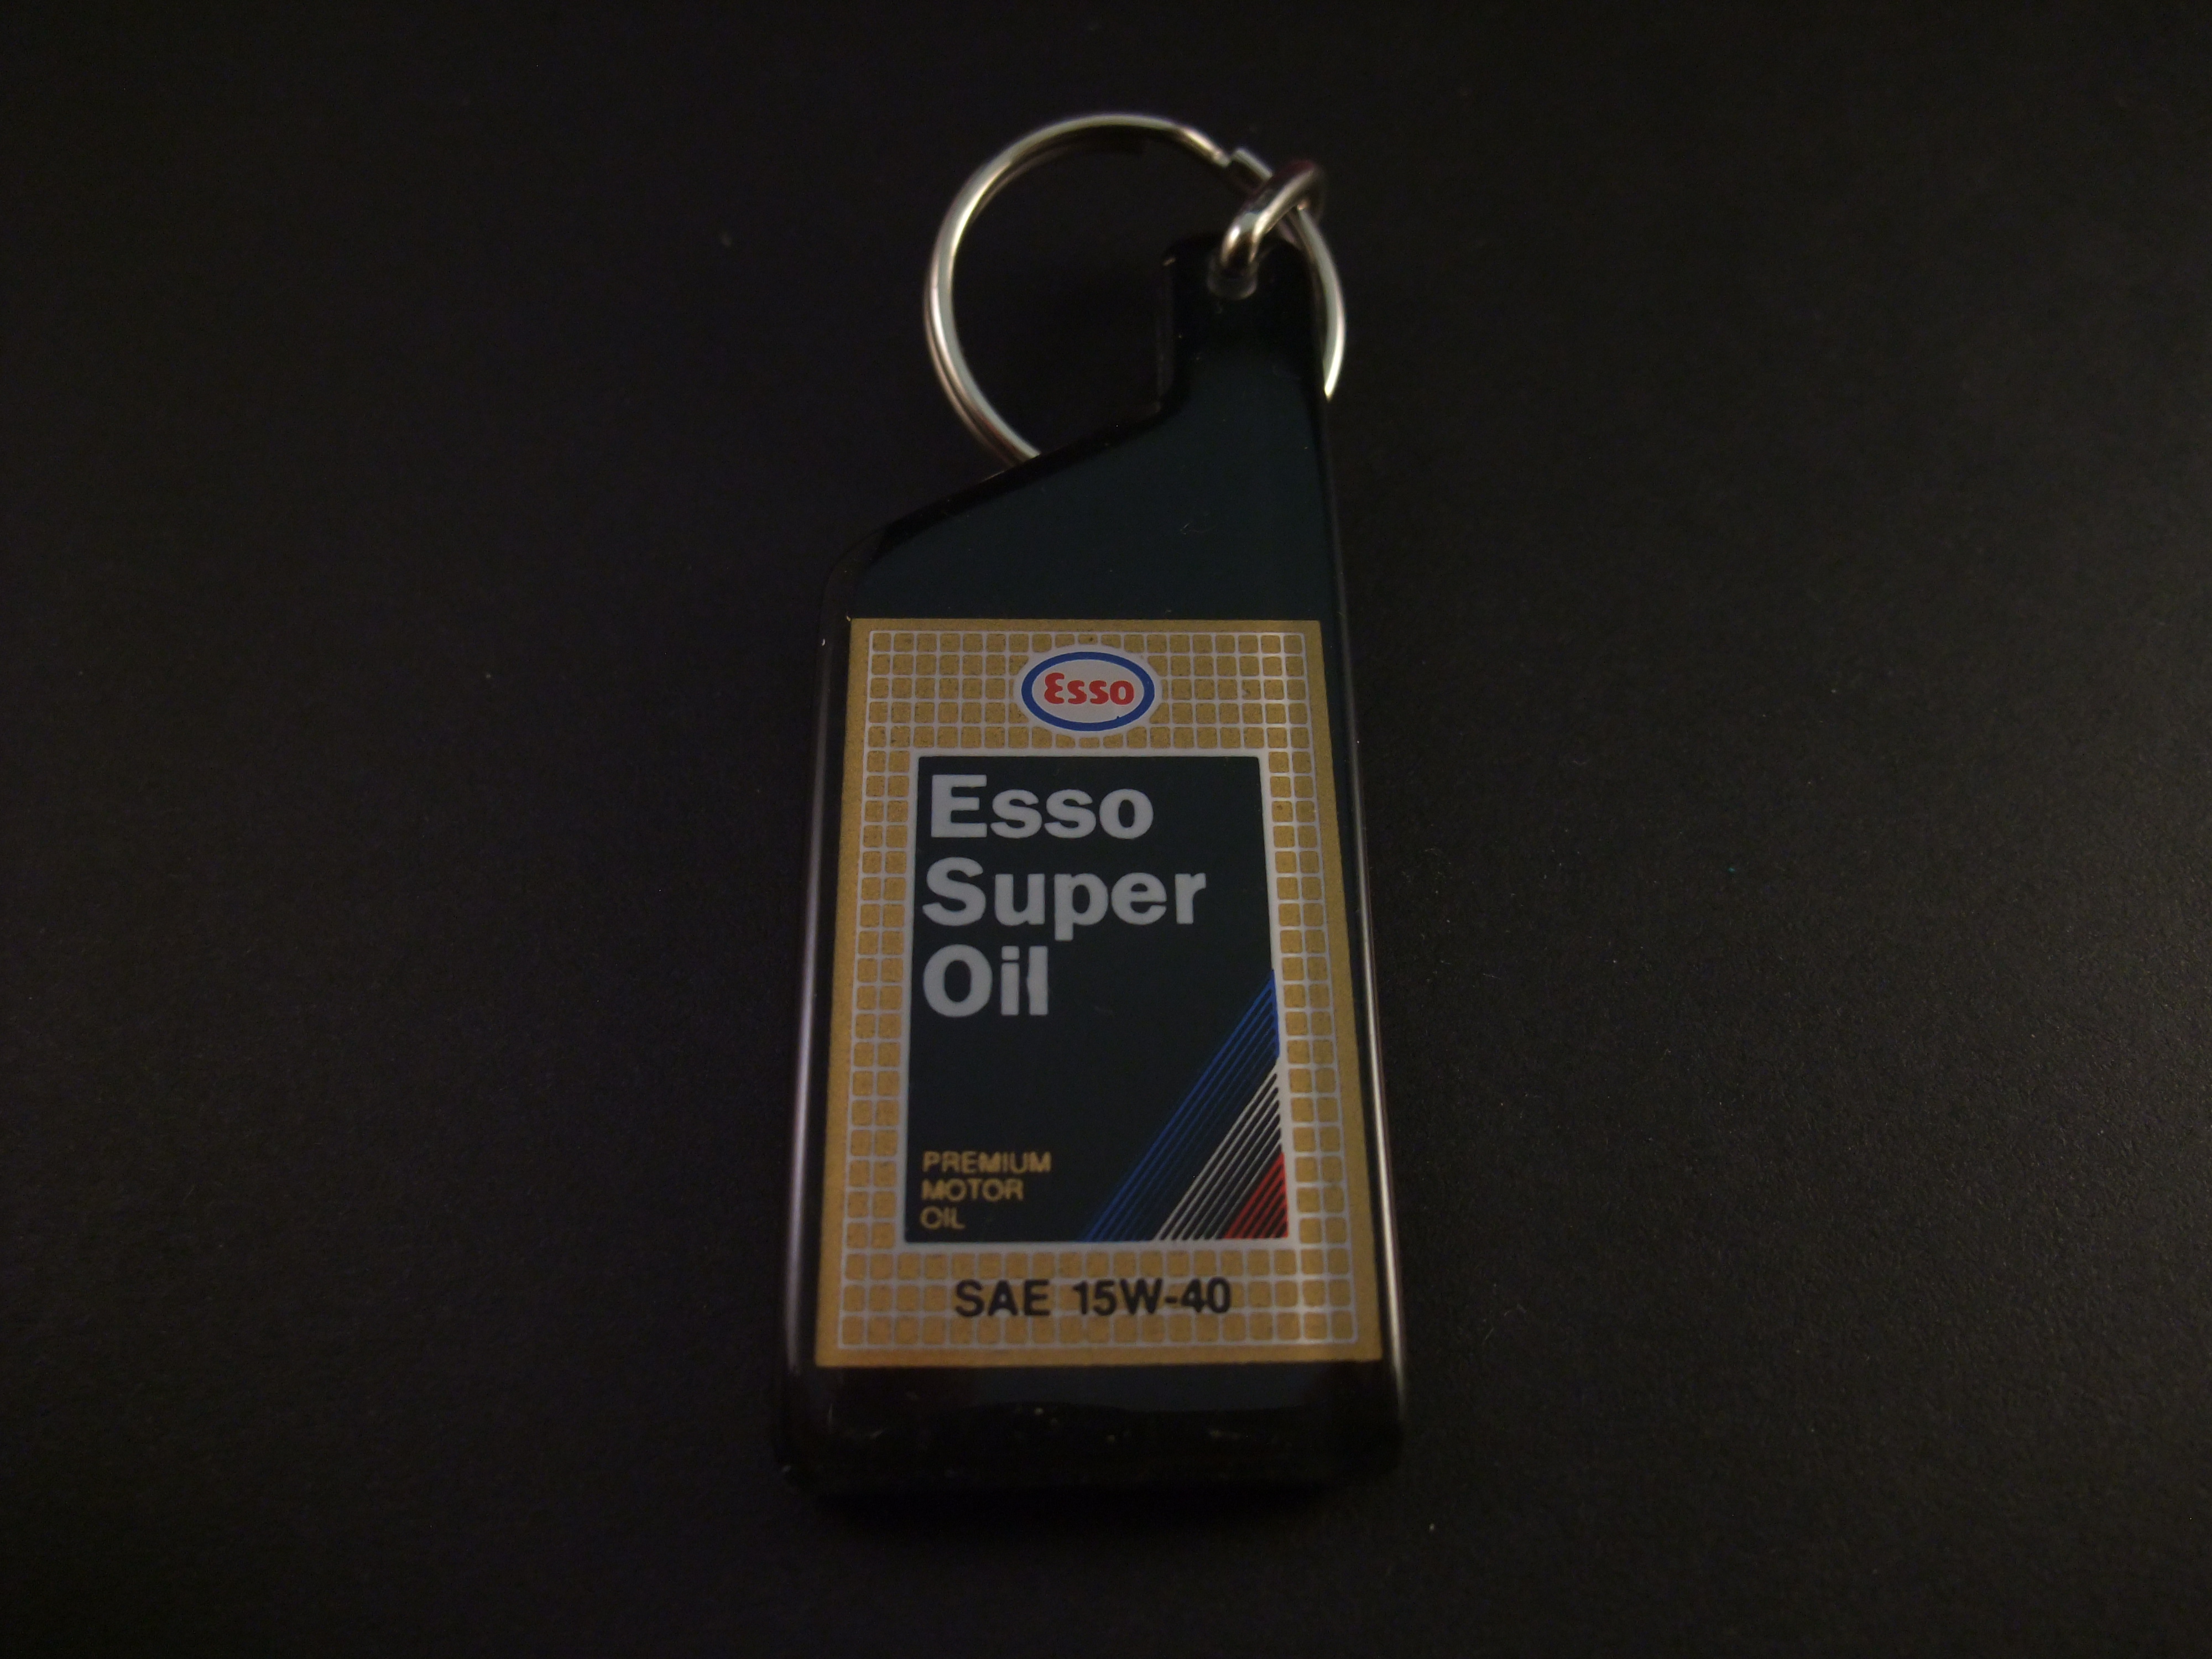 Esso super oil, Premium motor oil( SAE 15W-40) sleutelhanger